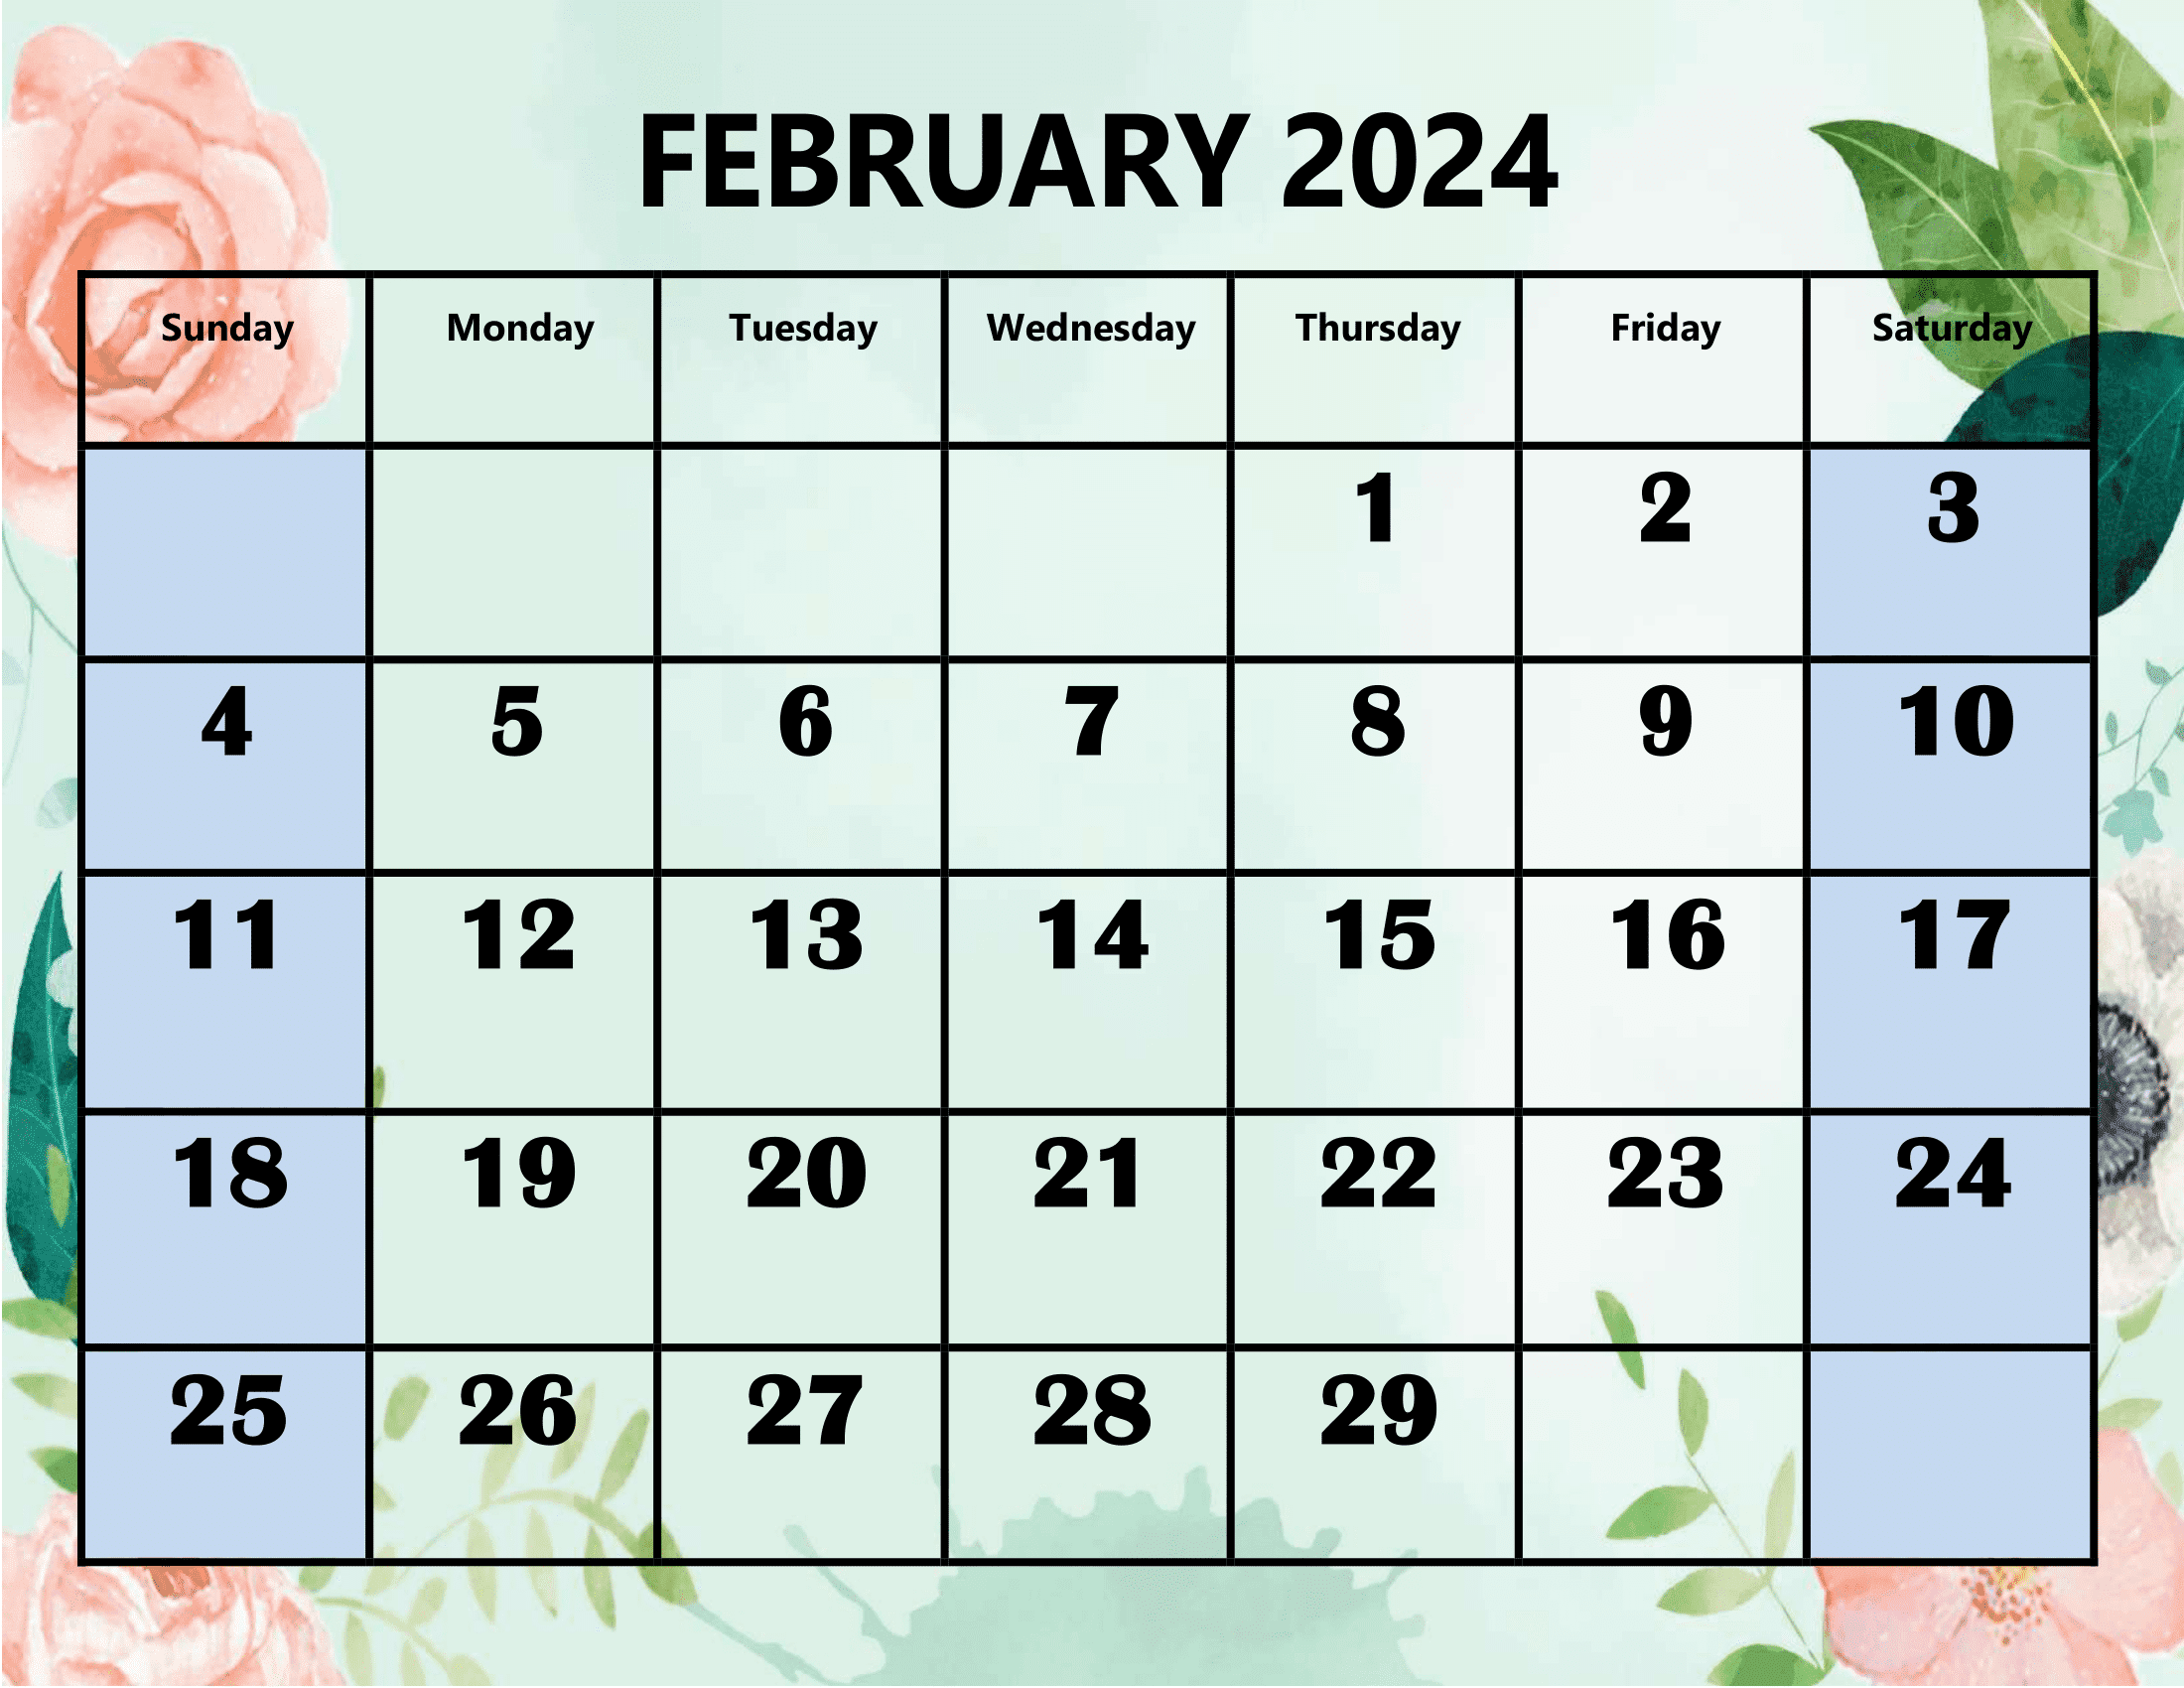 February Calendar 2024 Tamil Rowe Wanids